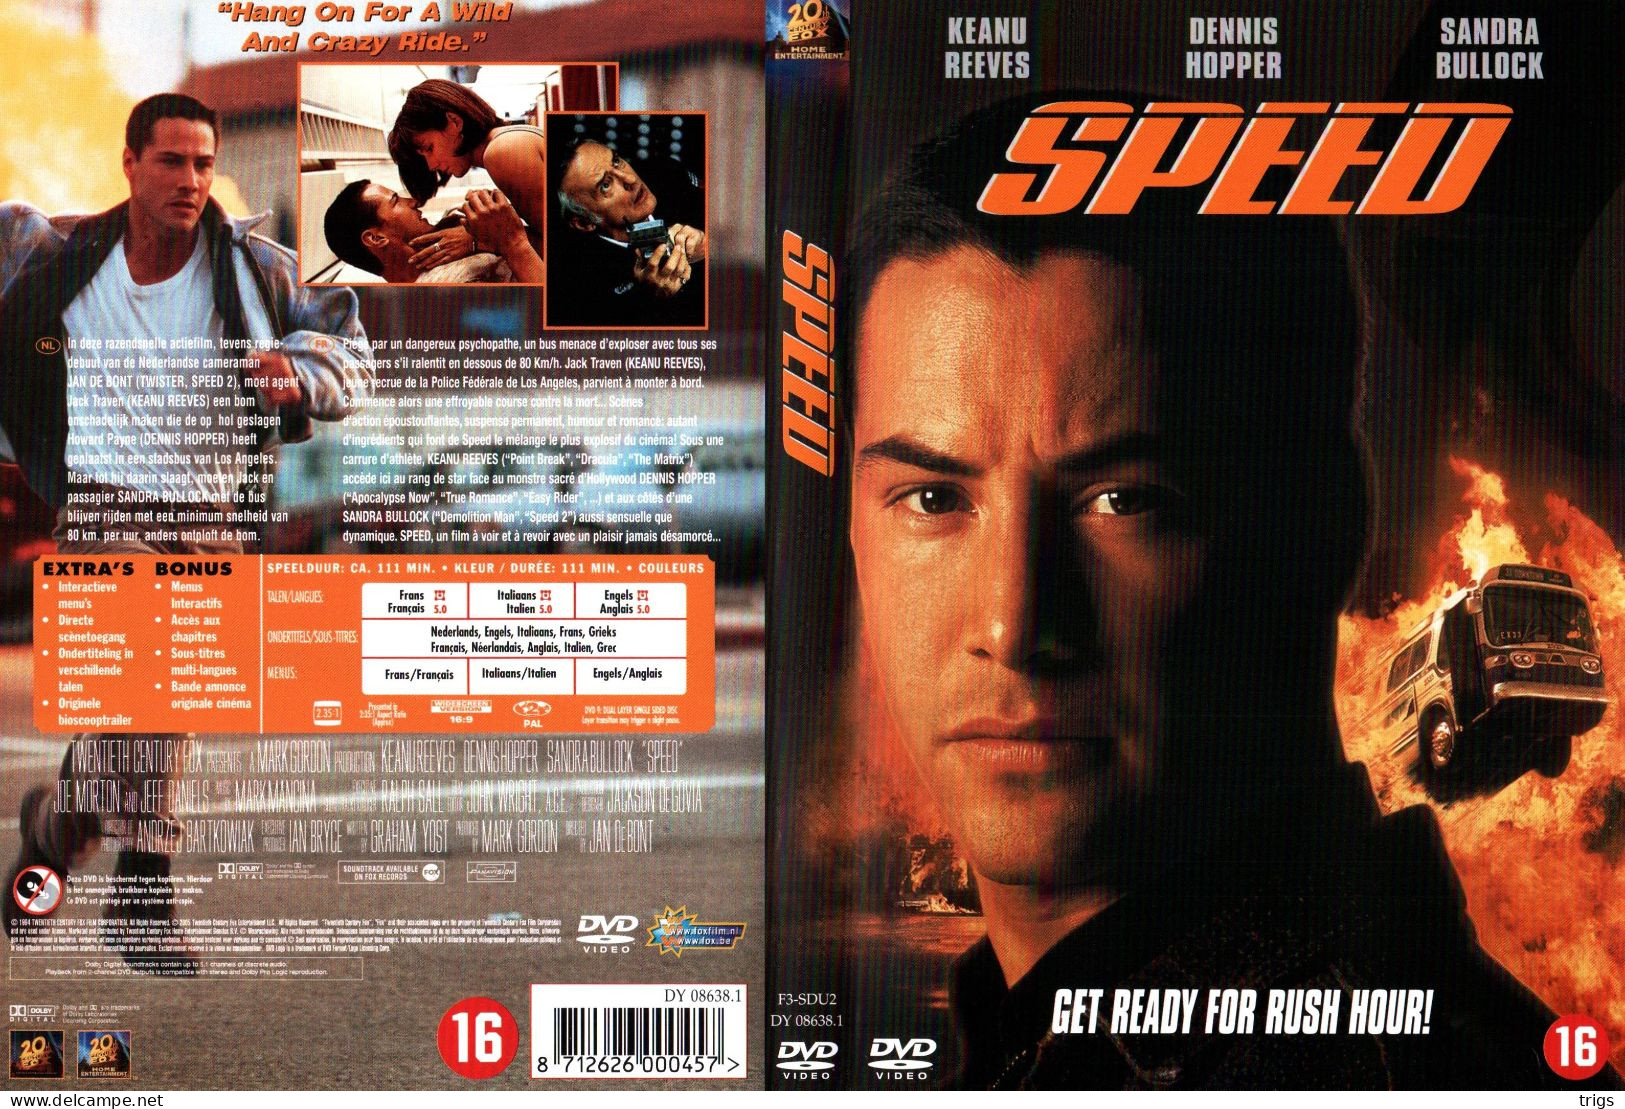 DVD - Speed - Action, Adventure